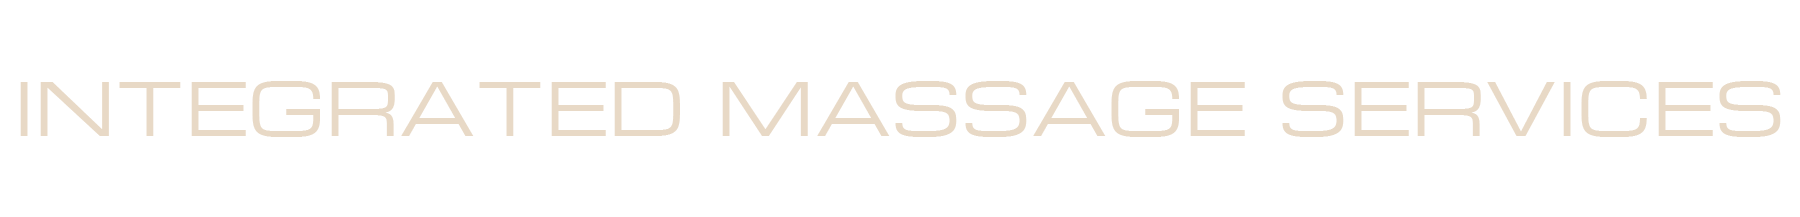 Integrated Massage Services-Logo